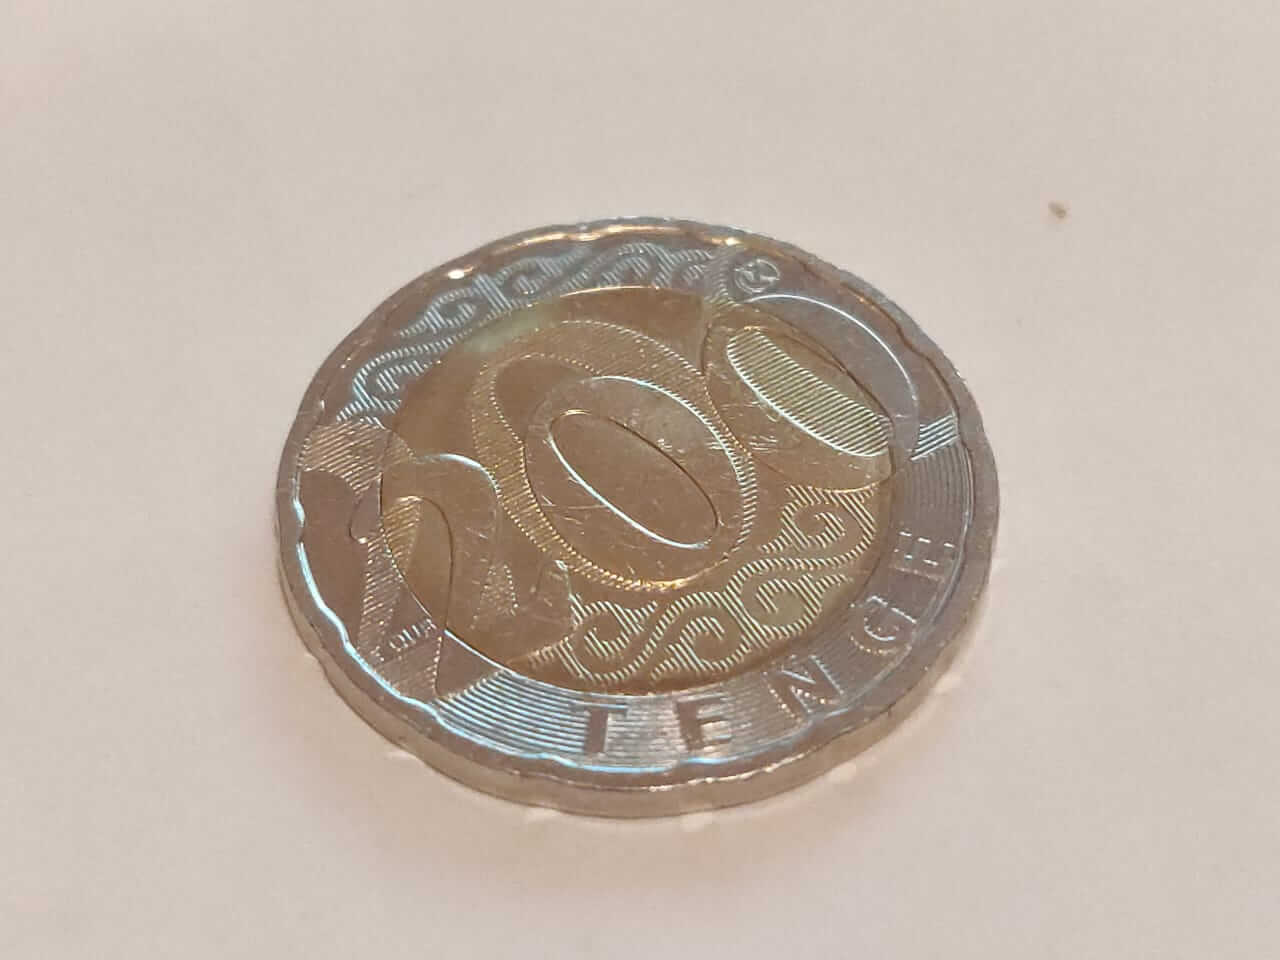 В Казахстане в начале года выпущена монета 200 тенге